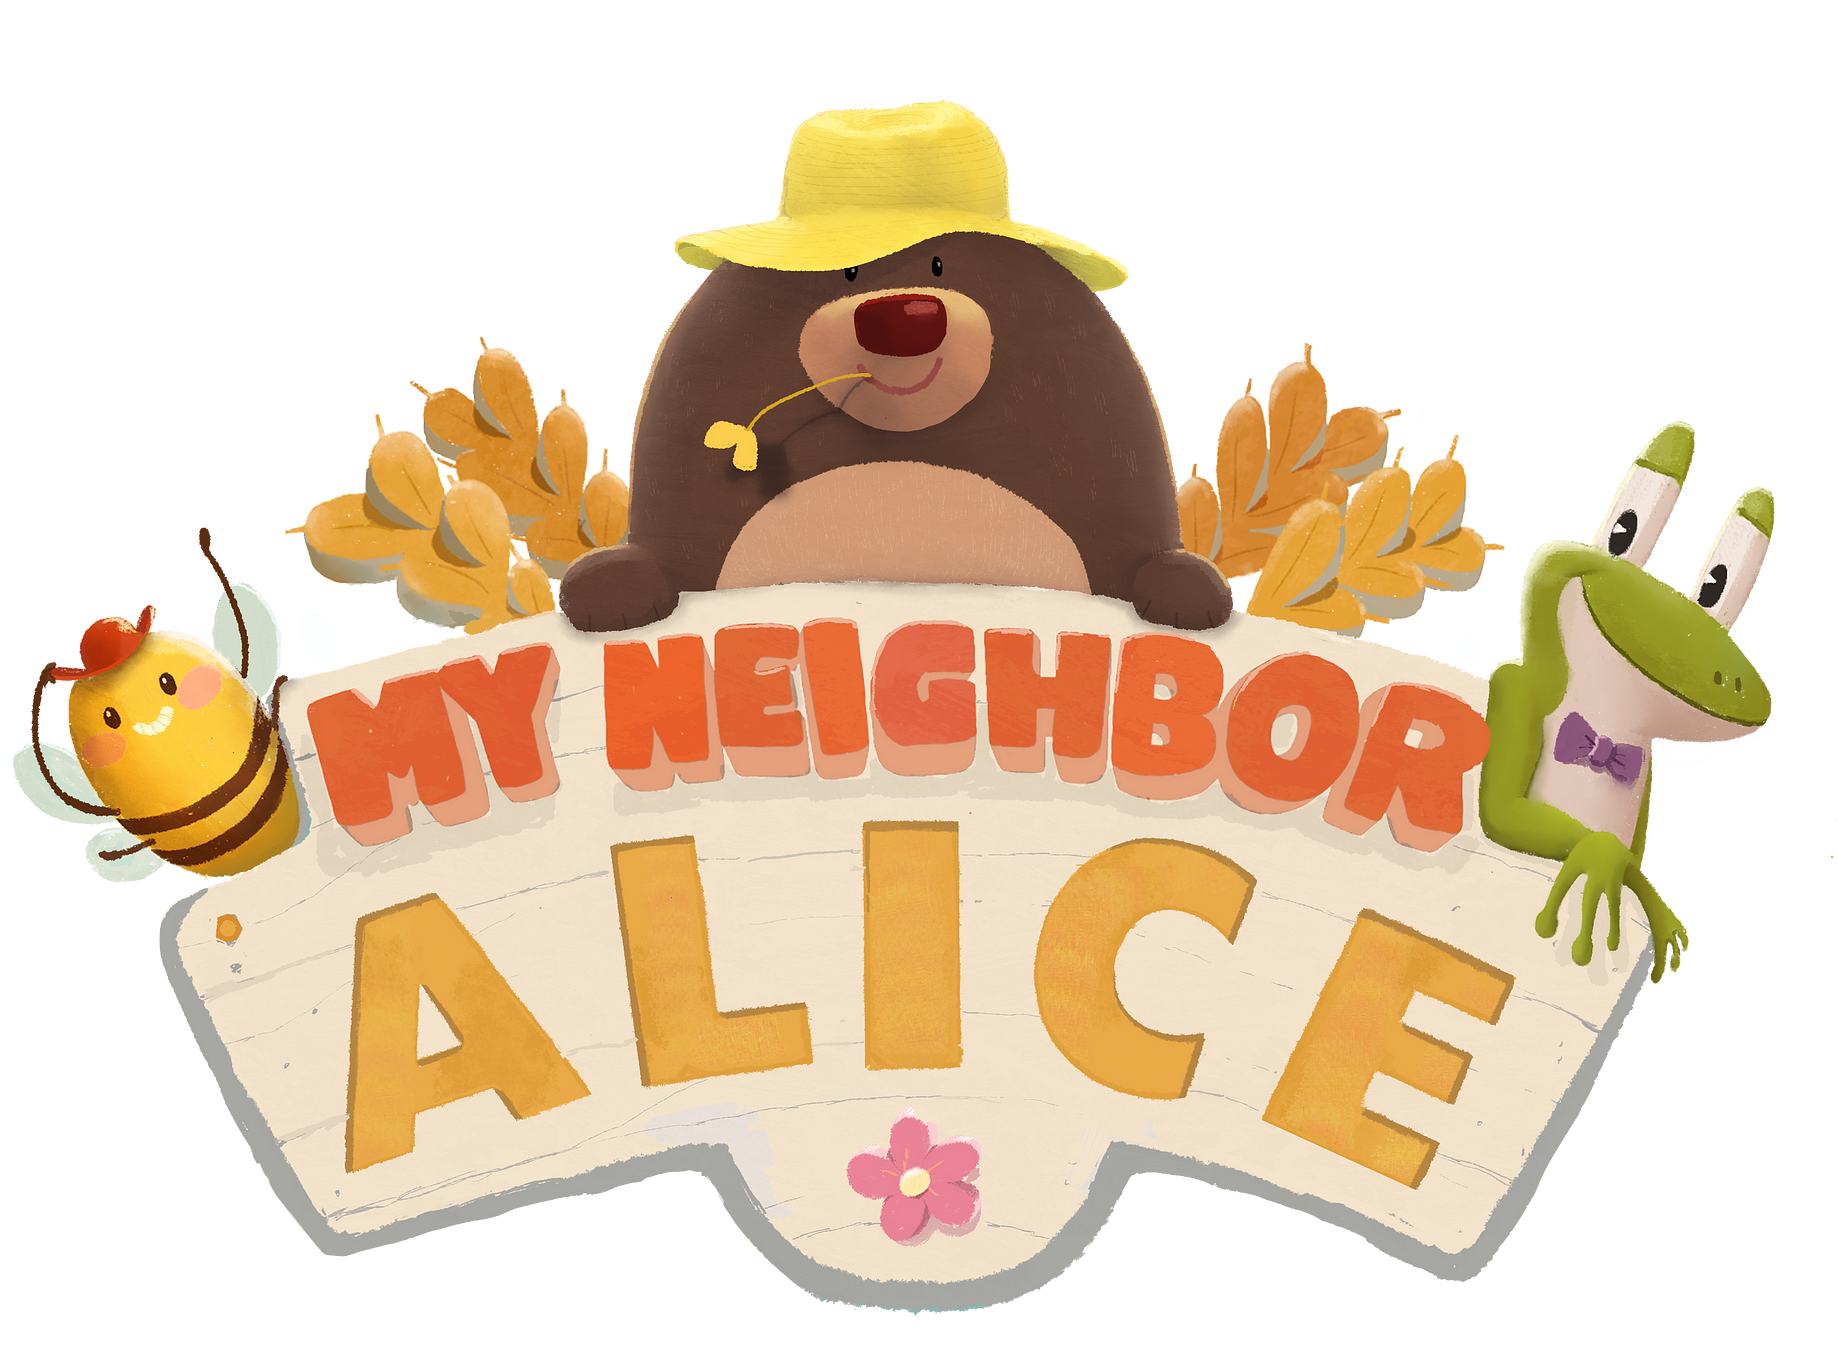 Team Alice Announces Alice S Mysterious Seed A Mobile Companion Game For My Neighbor Alice By My Neighbor Alice Medium